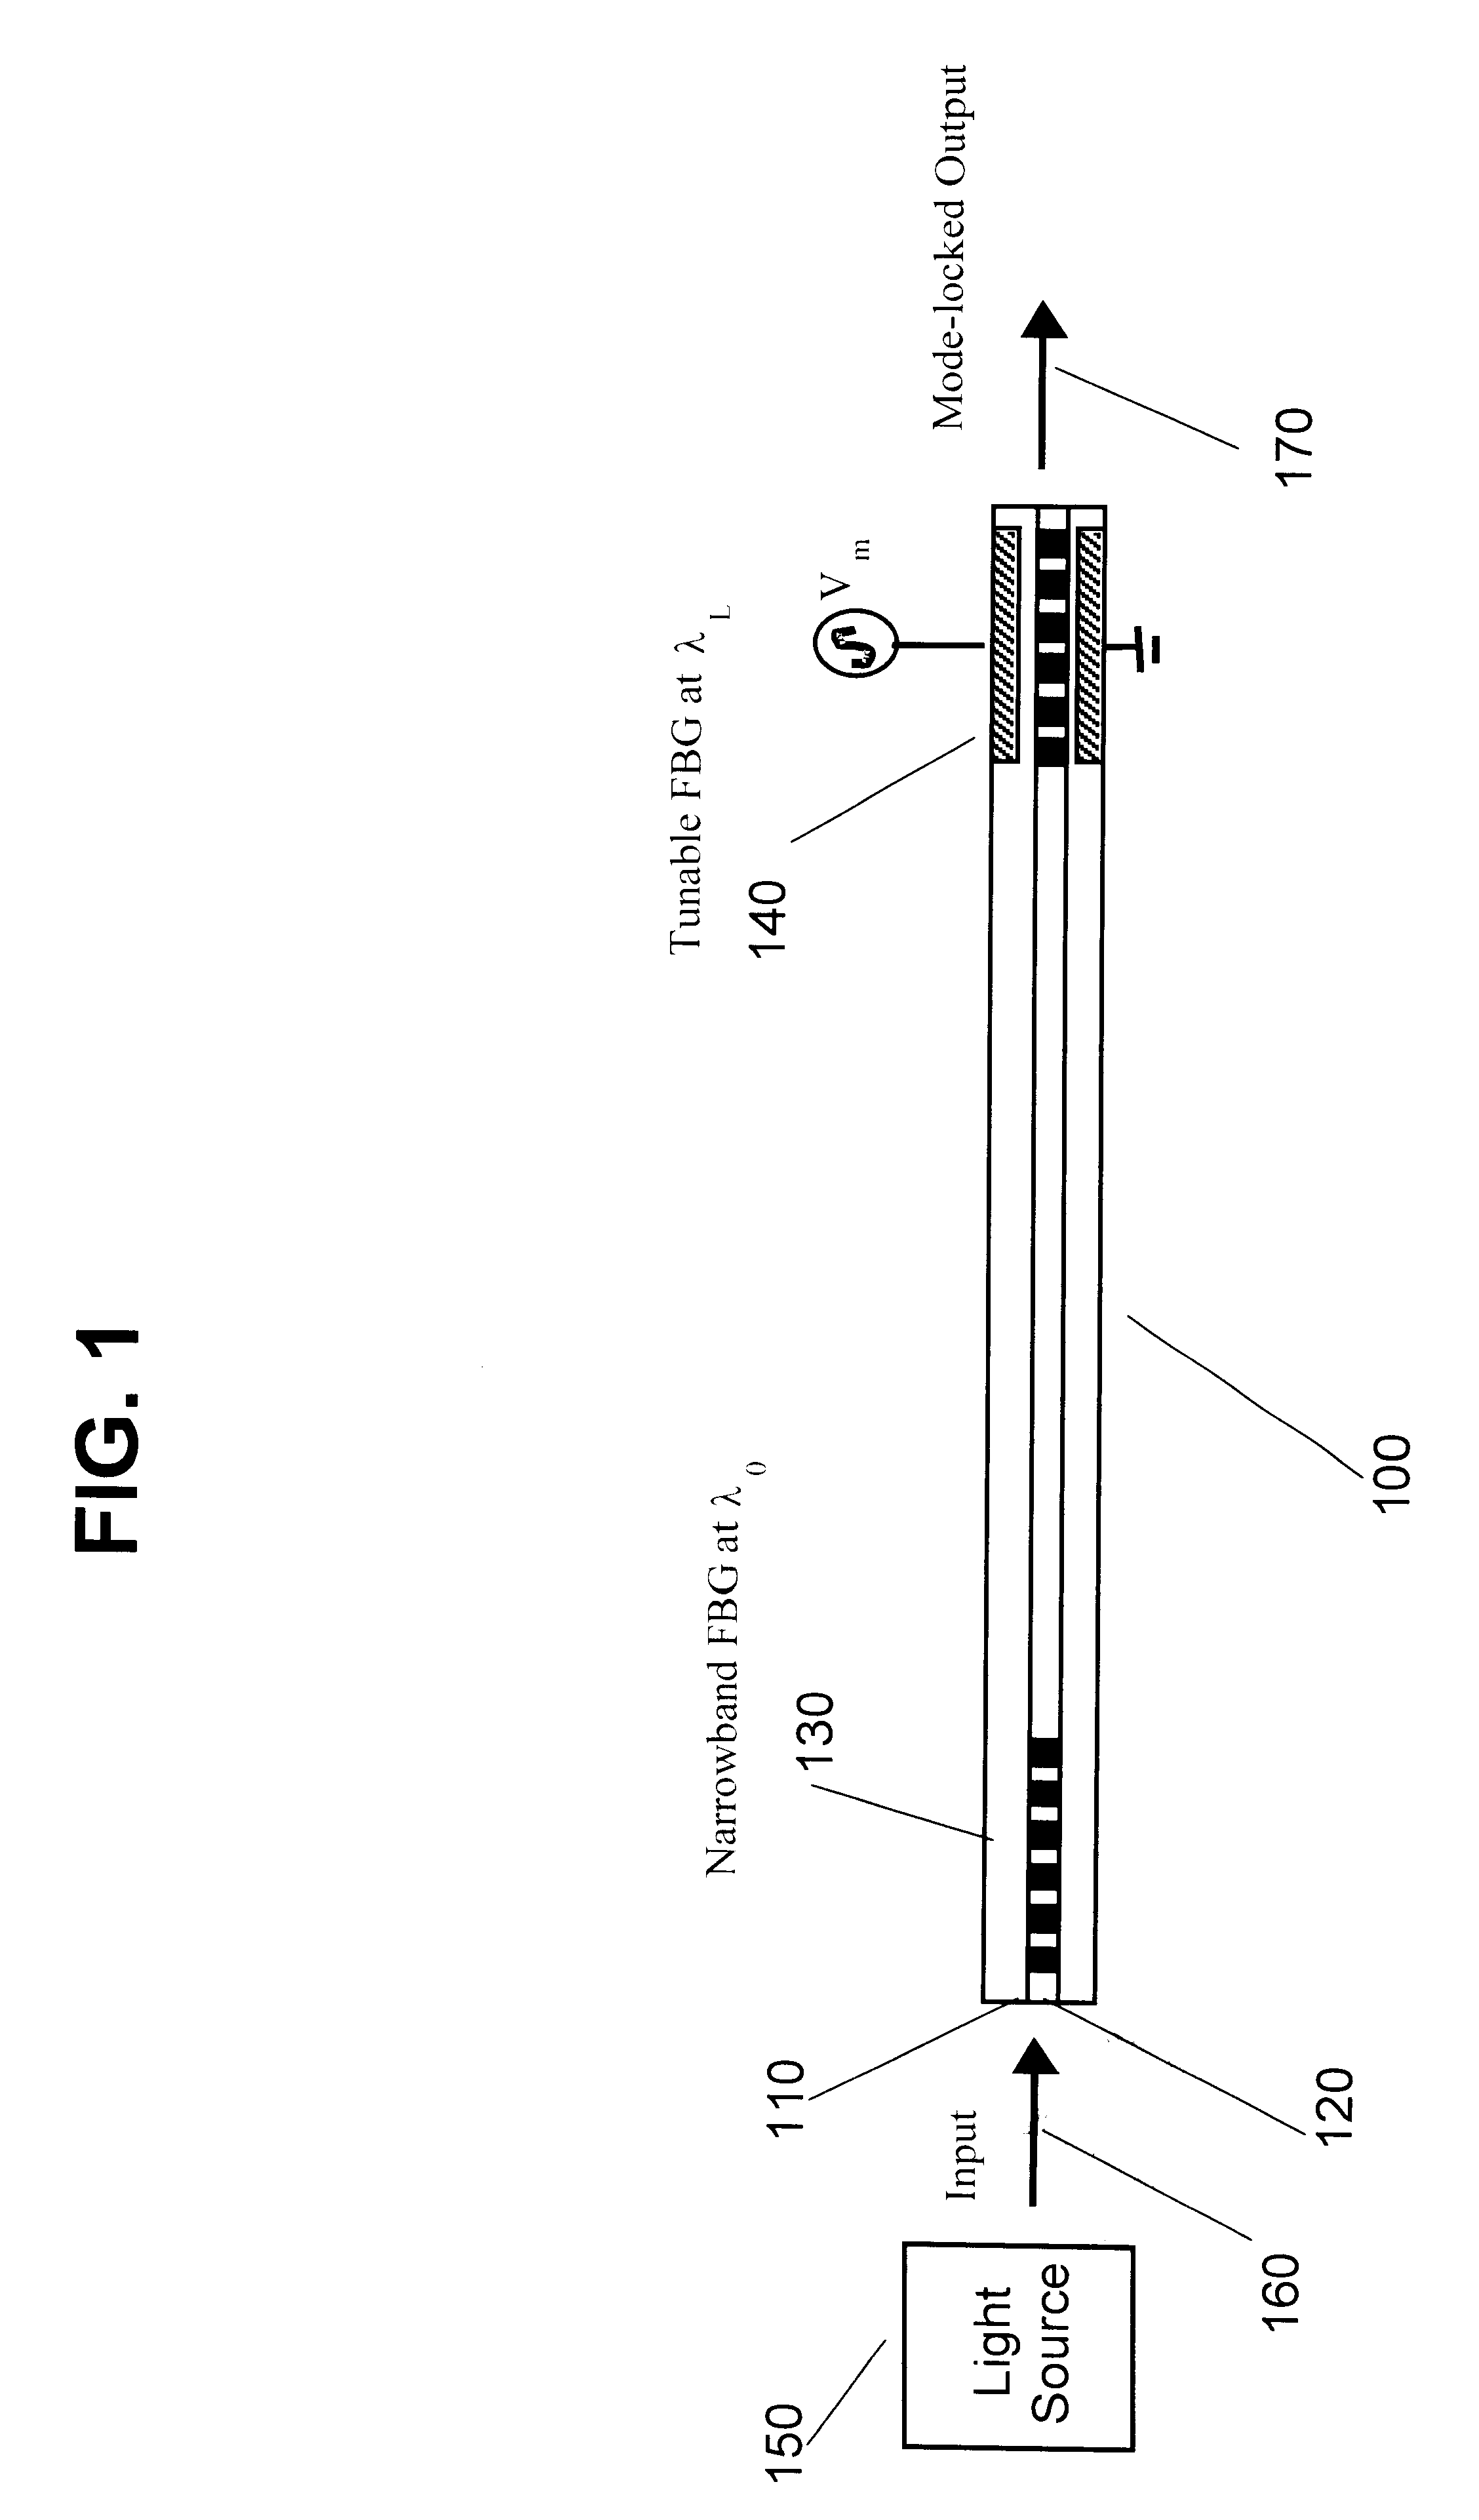 Method for actively modelocking an all-fiber laser